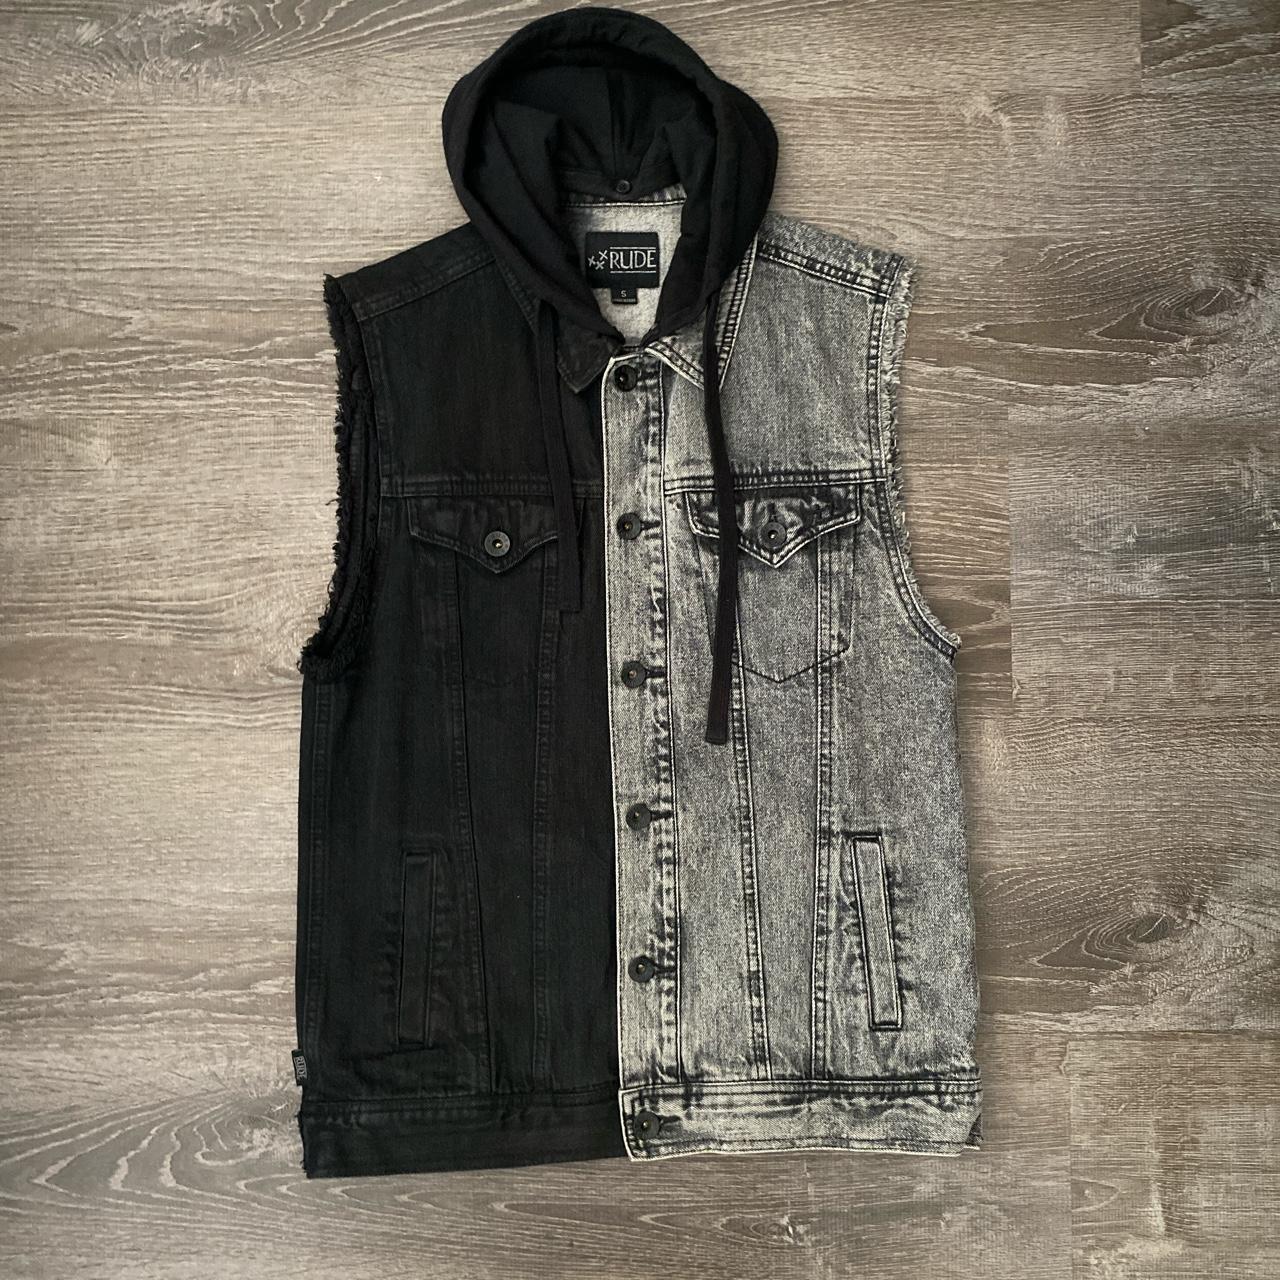 Product Image 1 - xxxrude black and grey vest